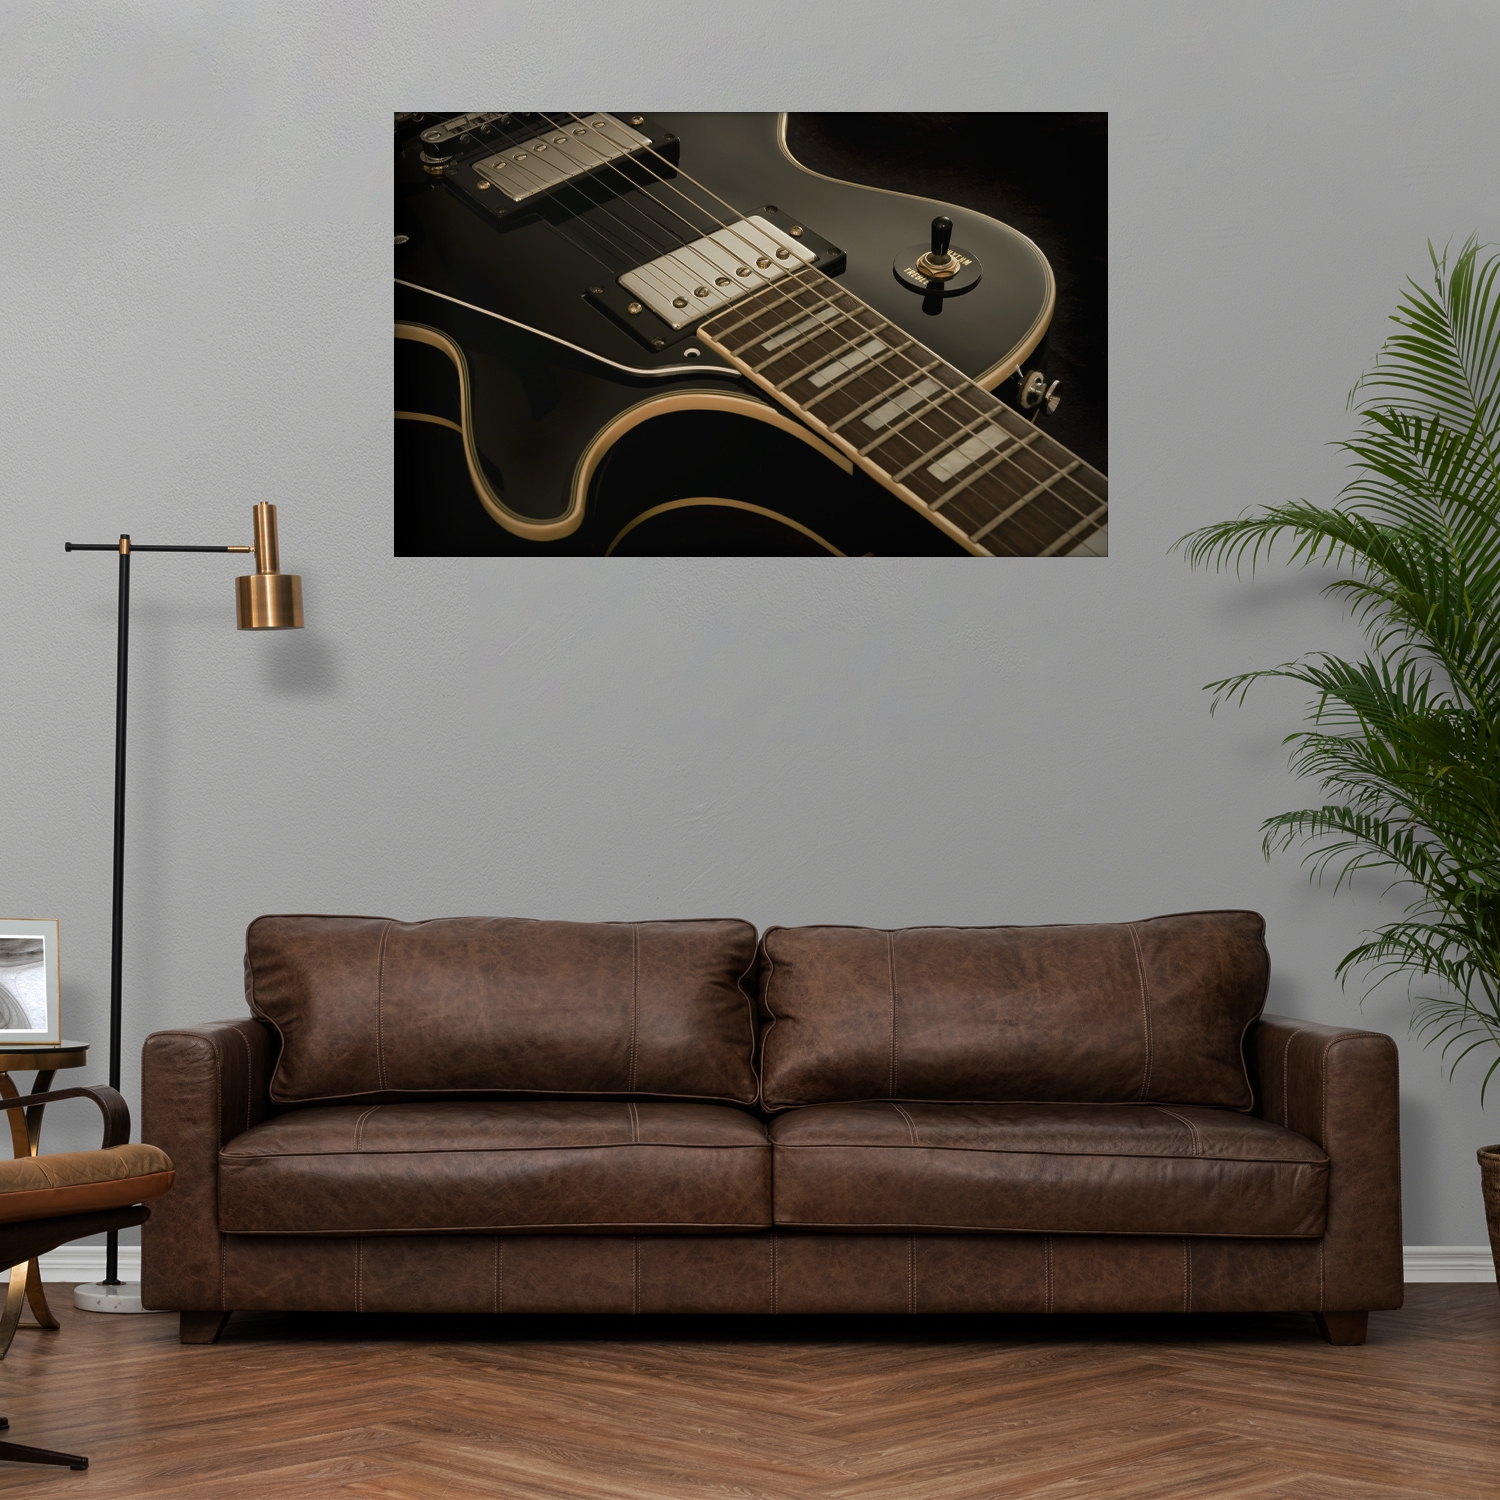 Tablou canvas luminos Guitar Black, CLT0291, Picma, dualview, panza + sasiu lemn, 80 x 120 cm